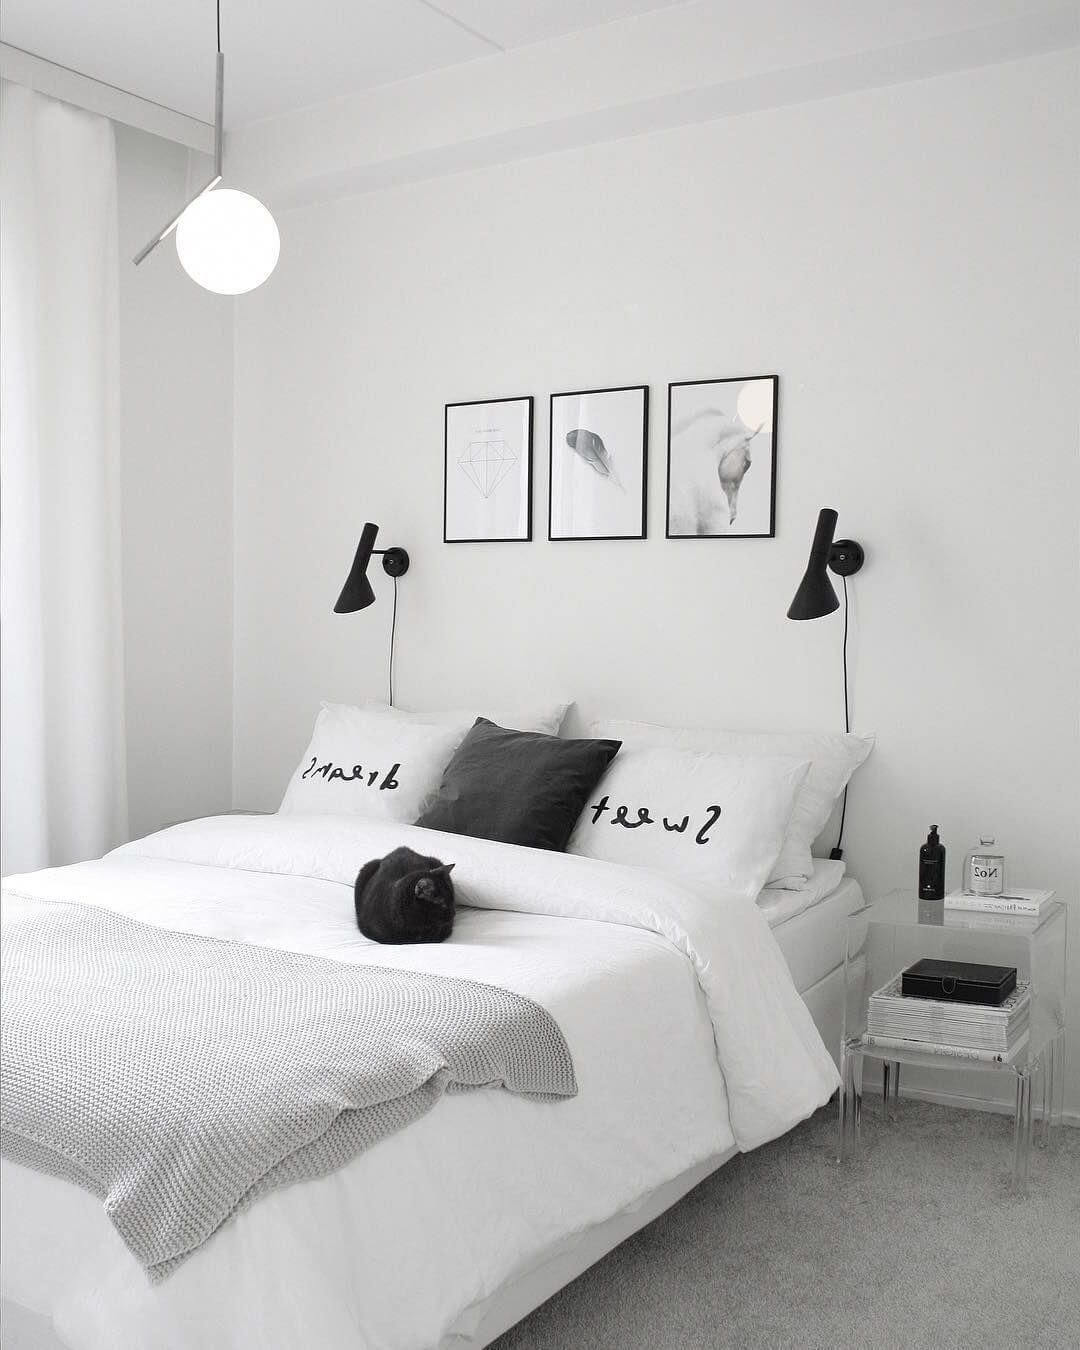 A gray bedroom decor for serene simplicity (1) - Copy